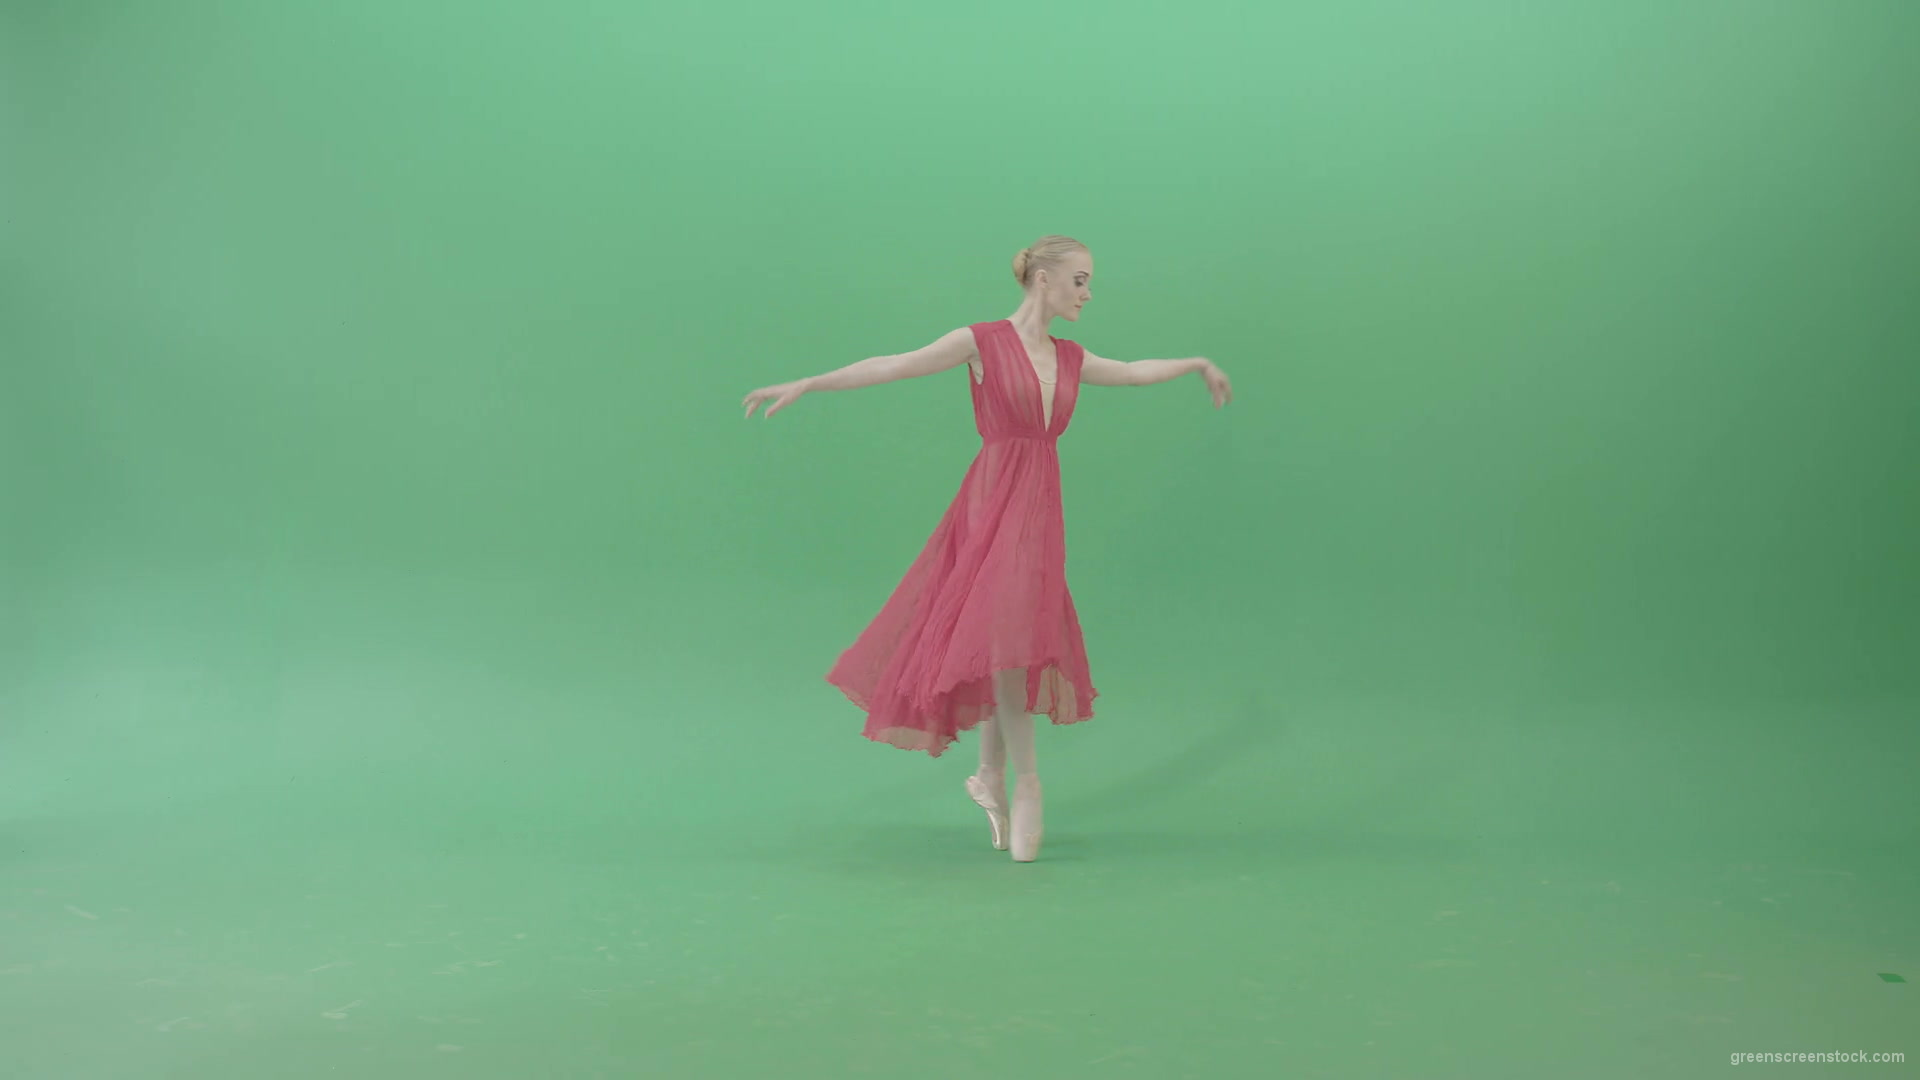 Light-Ballet-dancing-girl-in-red-wind-dress-spinning-on-green-screen-4K-Video-Footage-1920_007 Green Screen Stock